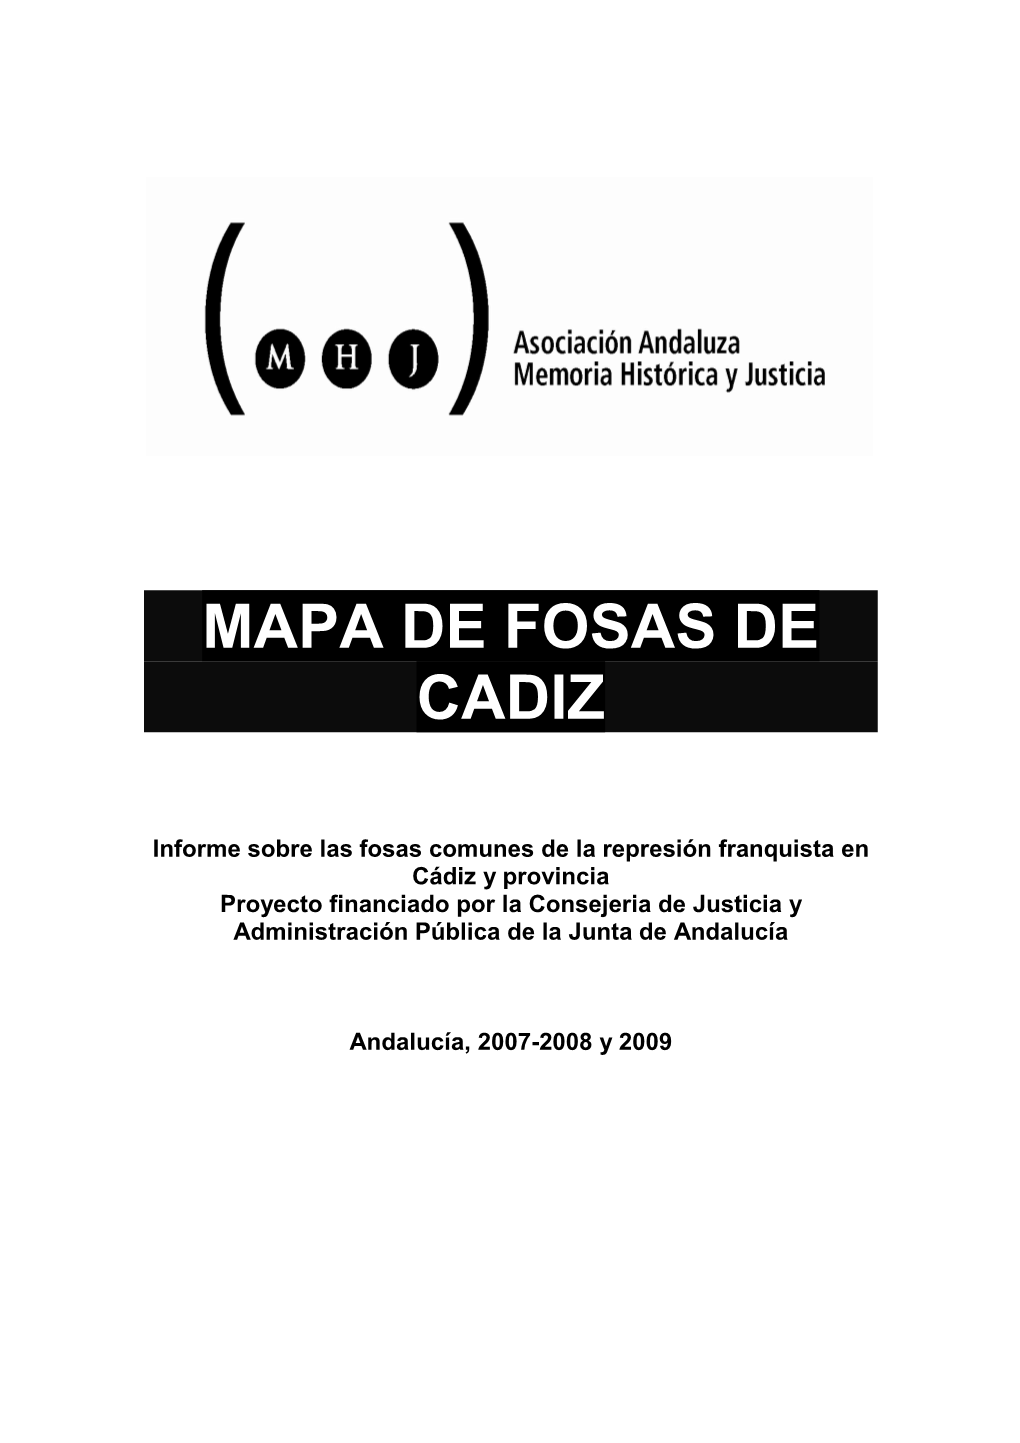 Mapa Fosas Cadiz Maquetado Sin Informantes